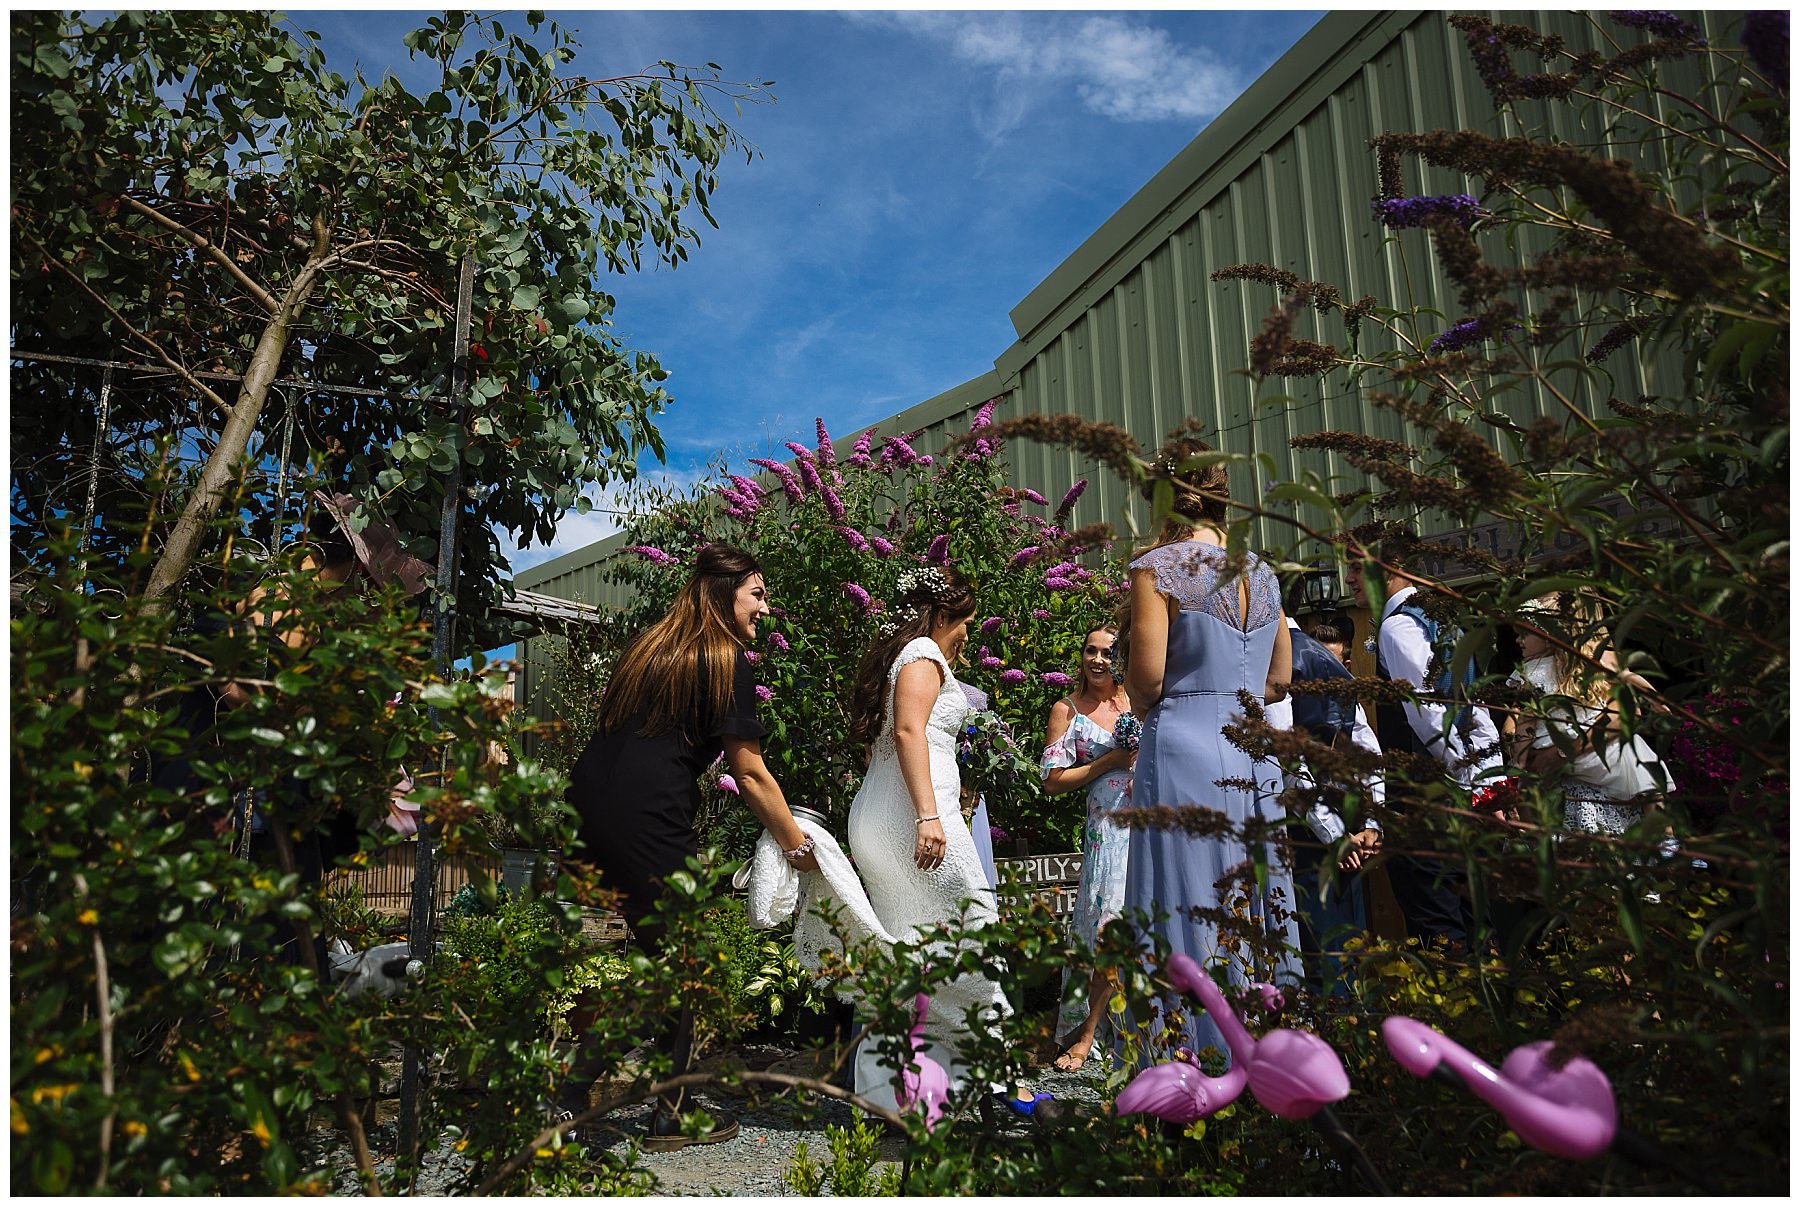 Wellbeing farm staff assist with brides dress